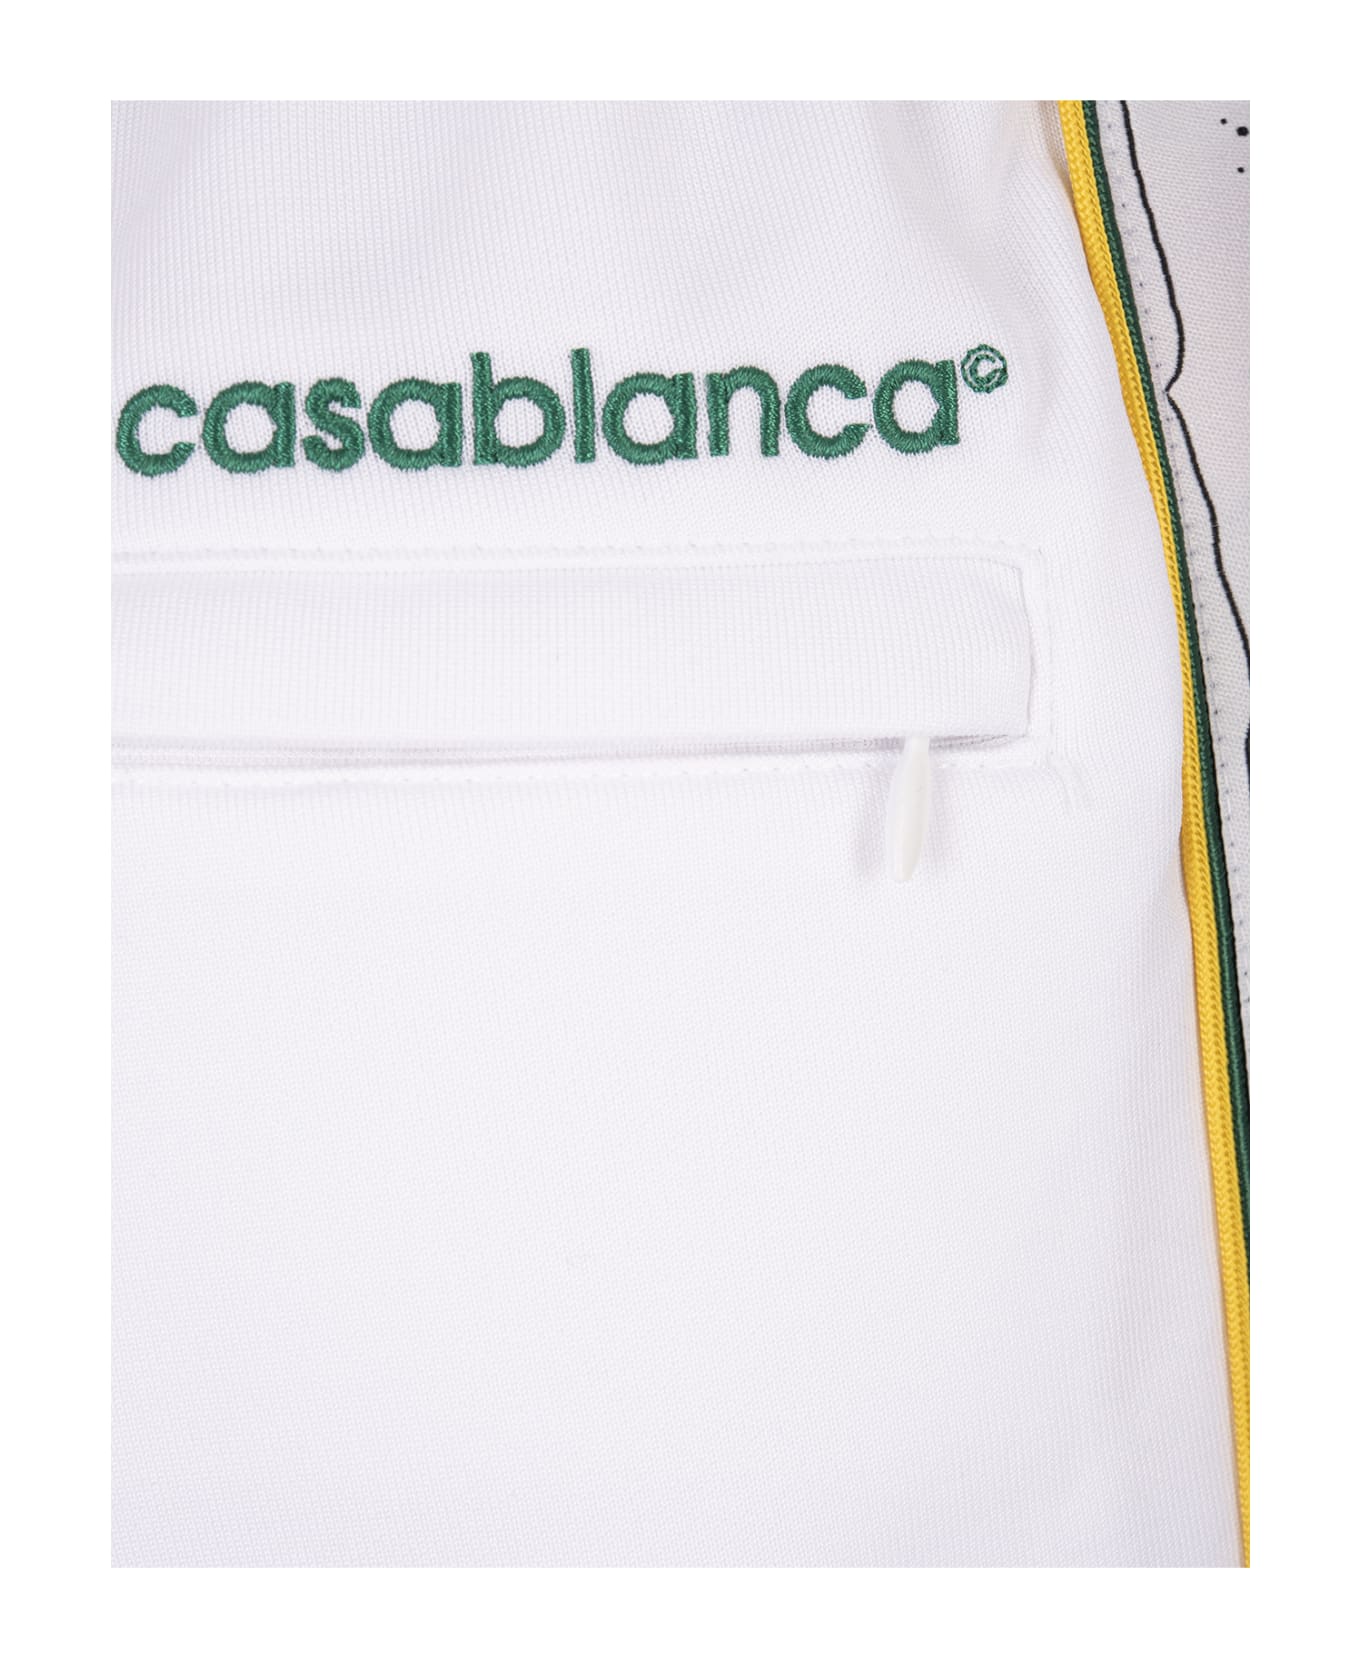 Casablanca White Shorts With Laurel Graphics - White